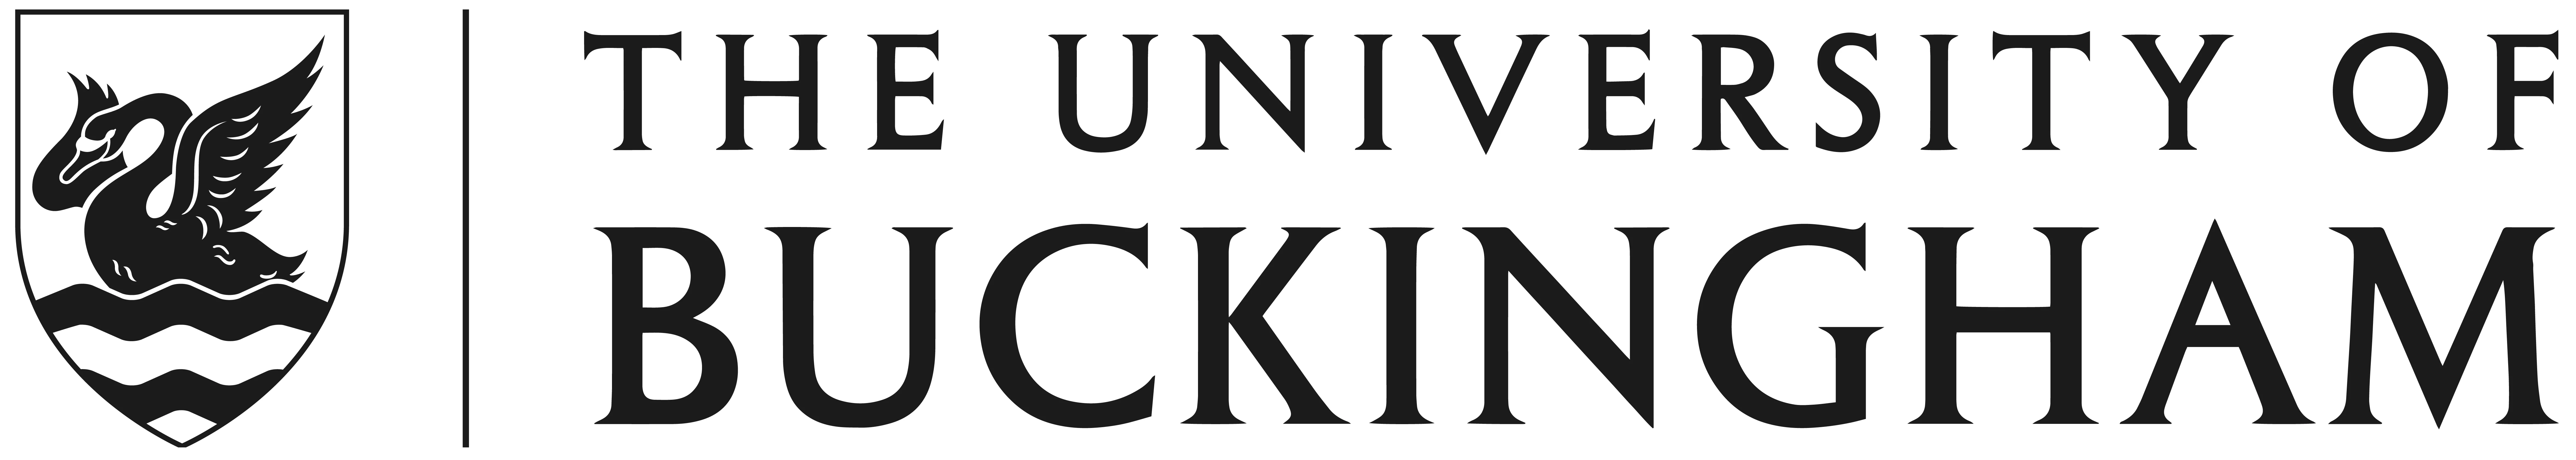 University_of_Buckingham_logo_for_wikipedia